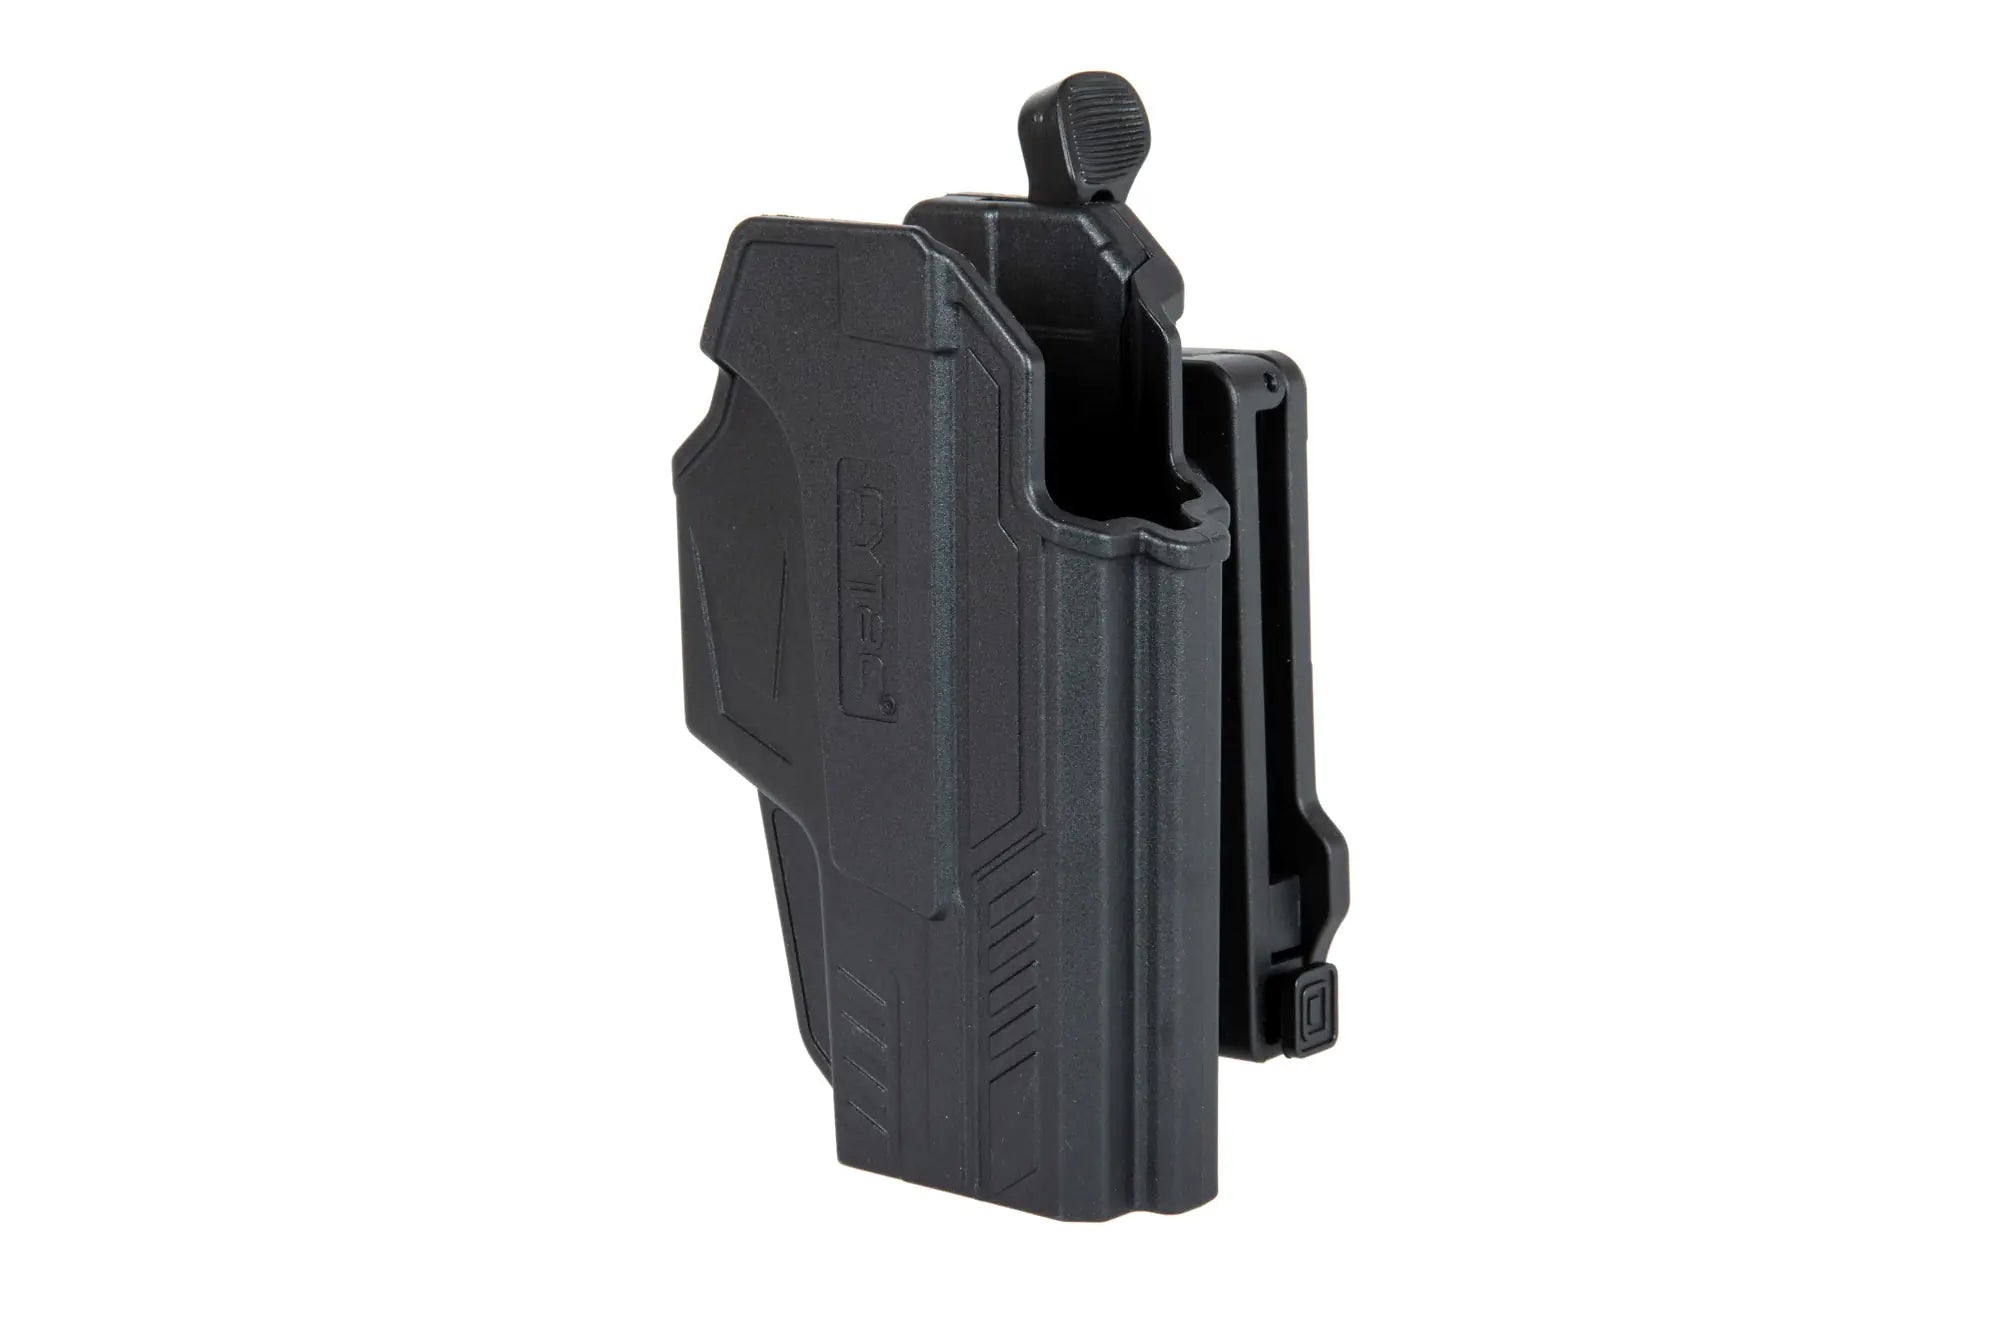 Kabura T- ThumbSmart Series holster with belt clip